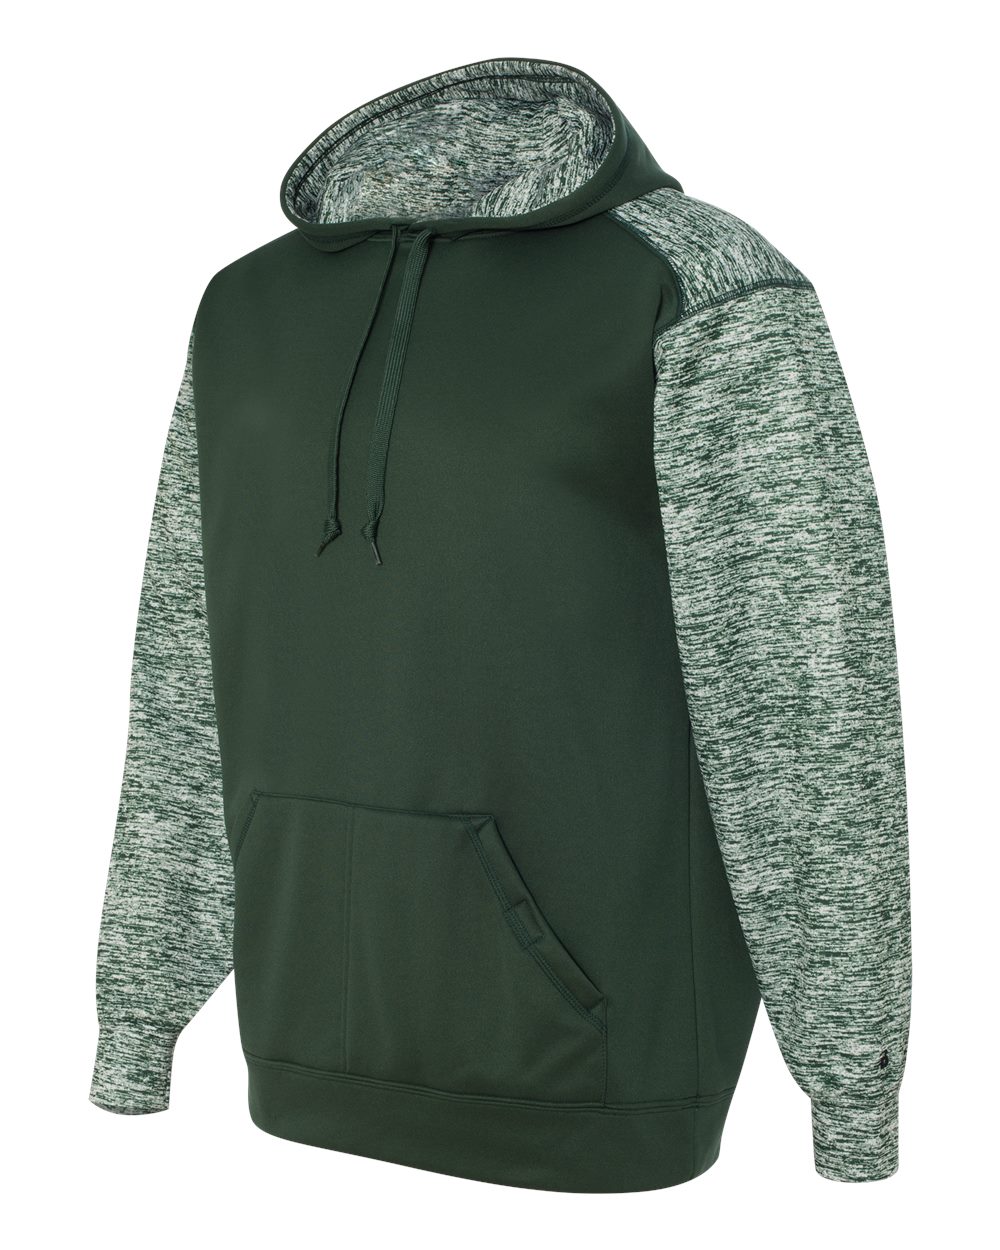 Badger 1462 - Blend Performance Hooded Sweatshirt $34.19